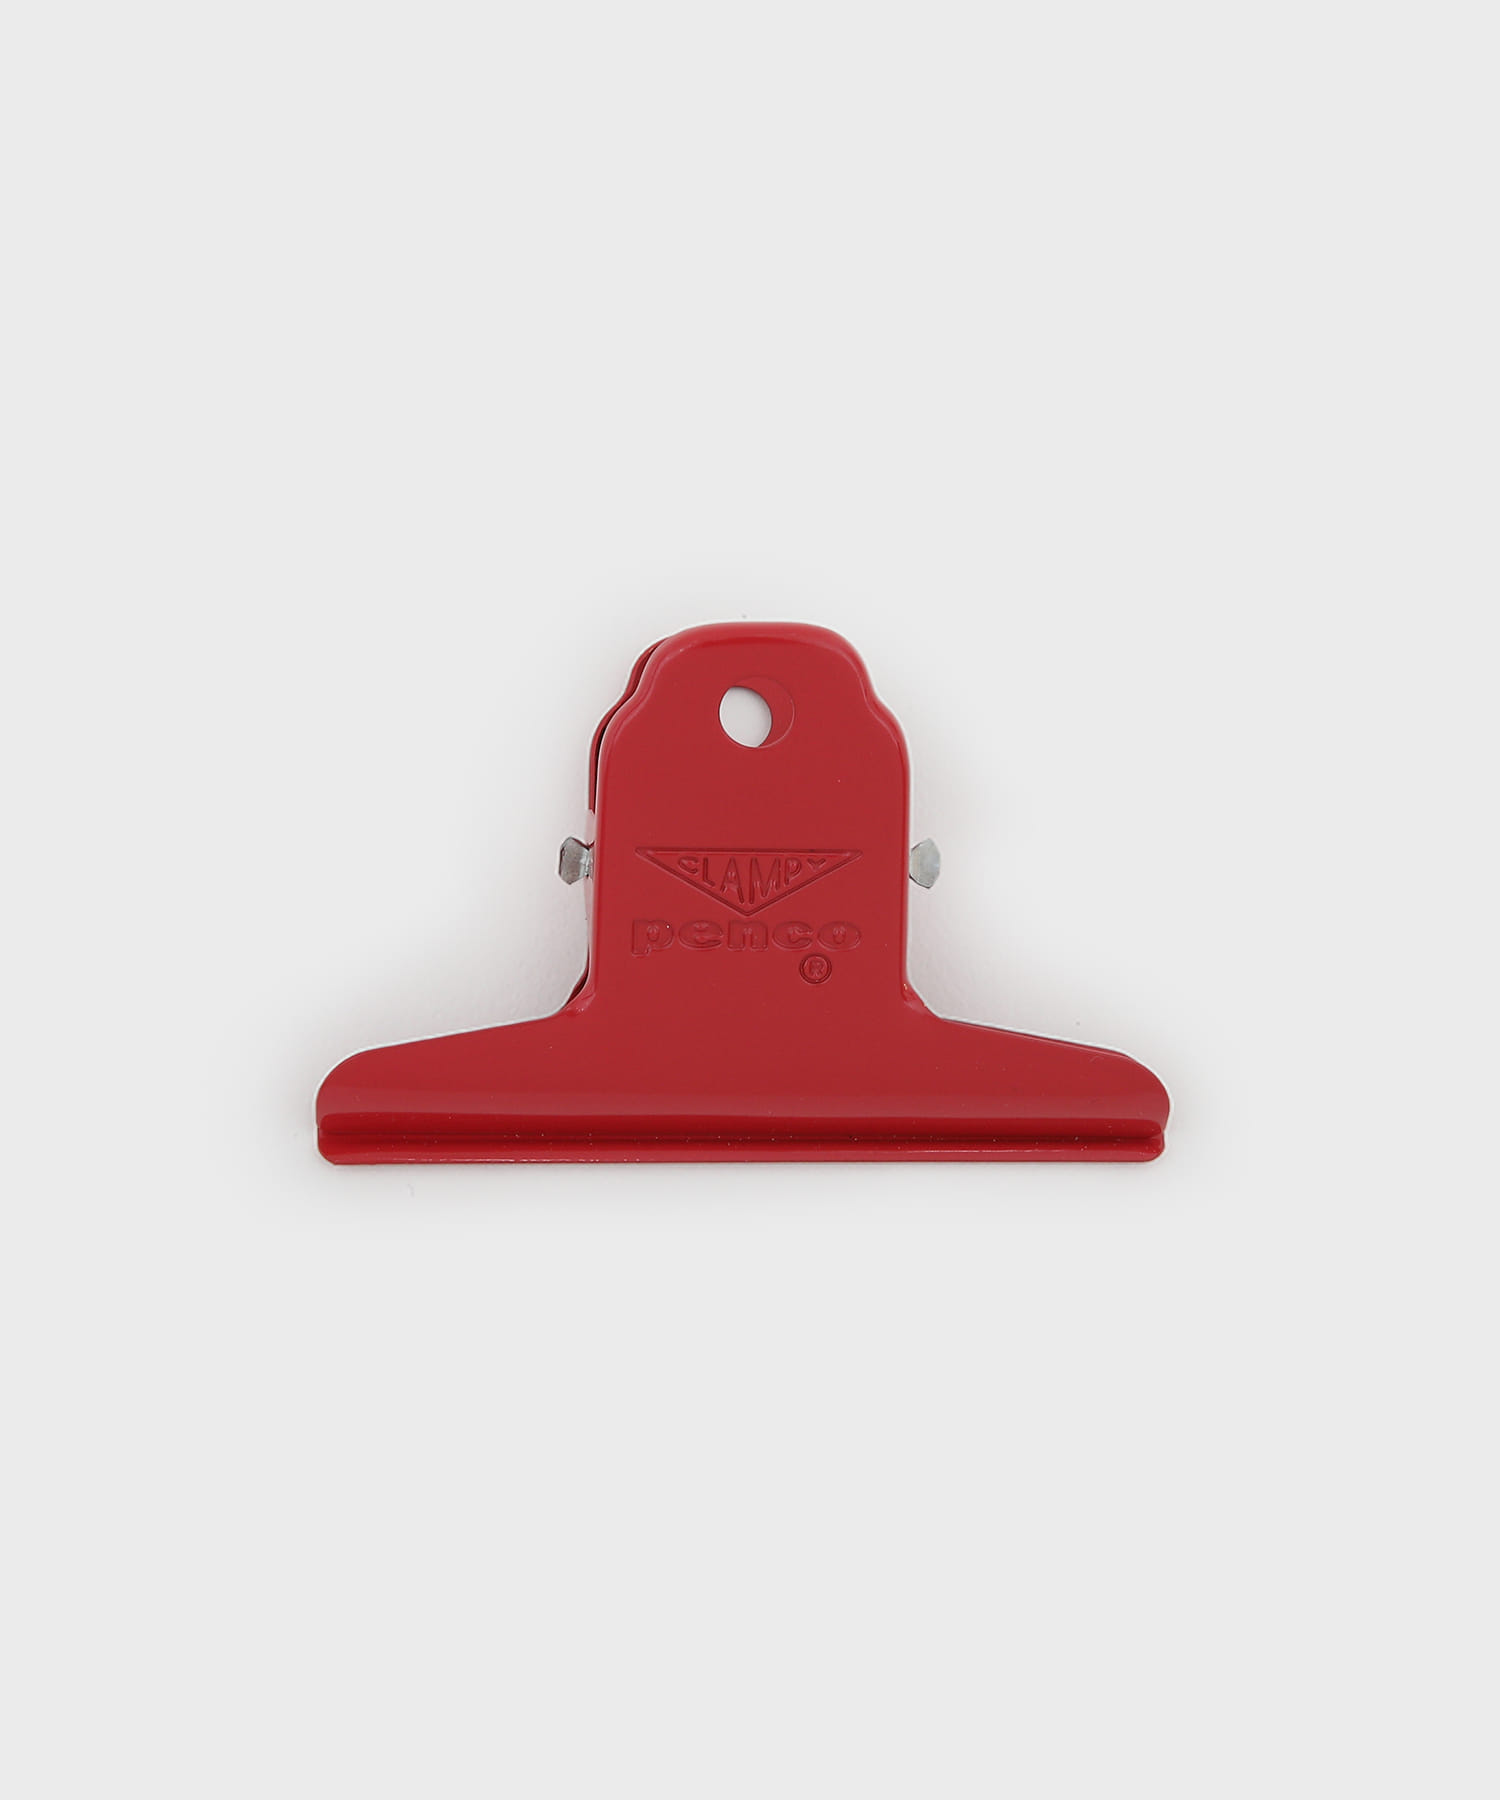 Penco Clampy Clip S (Red)